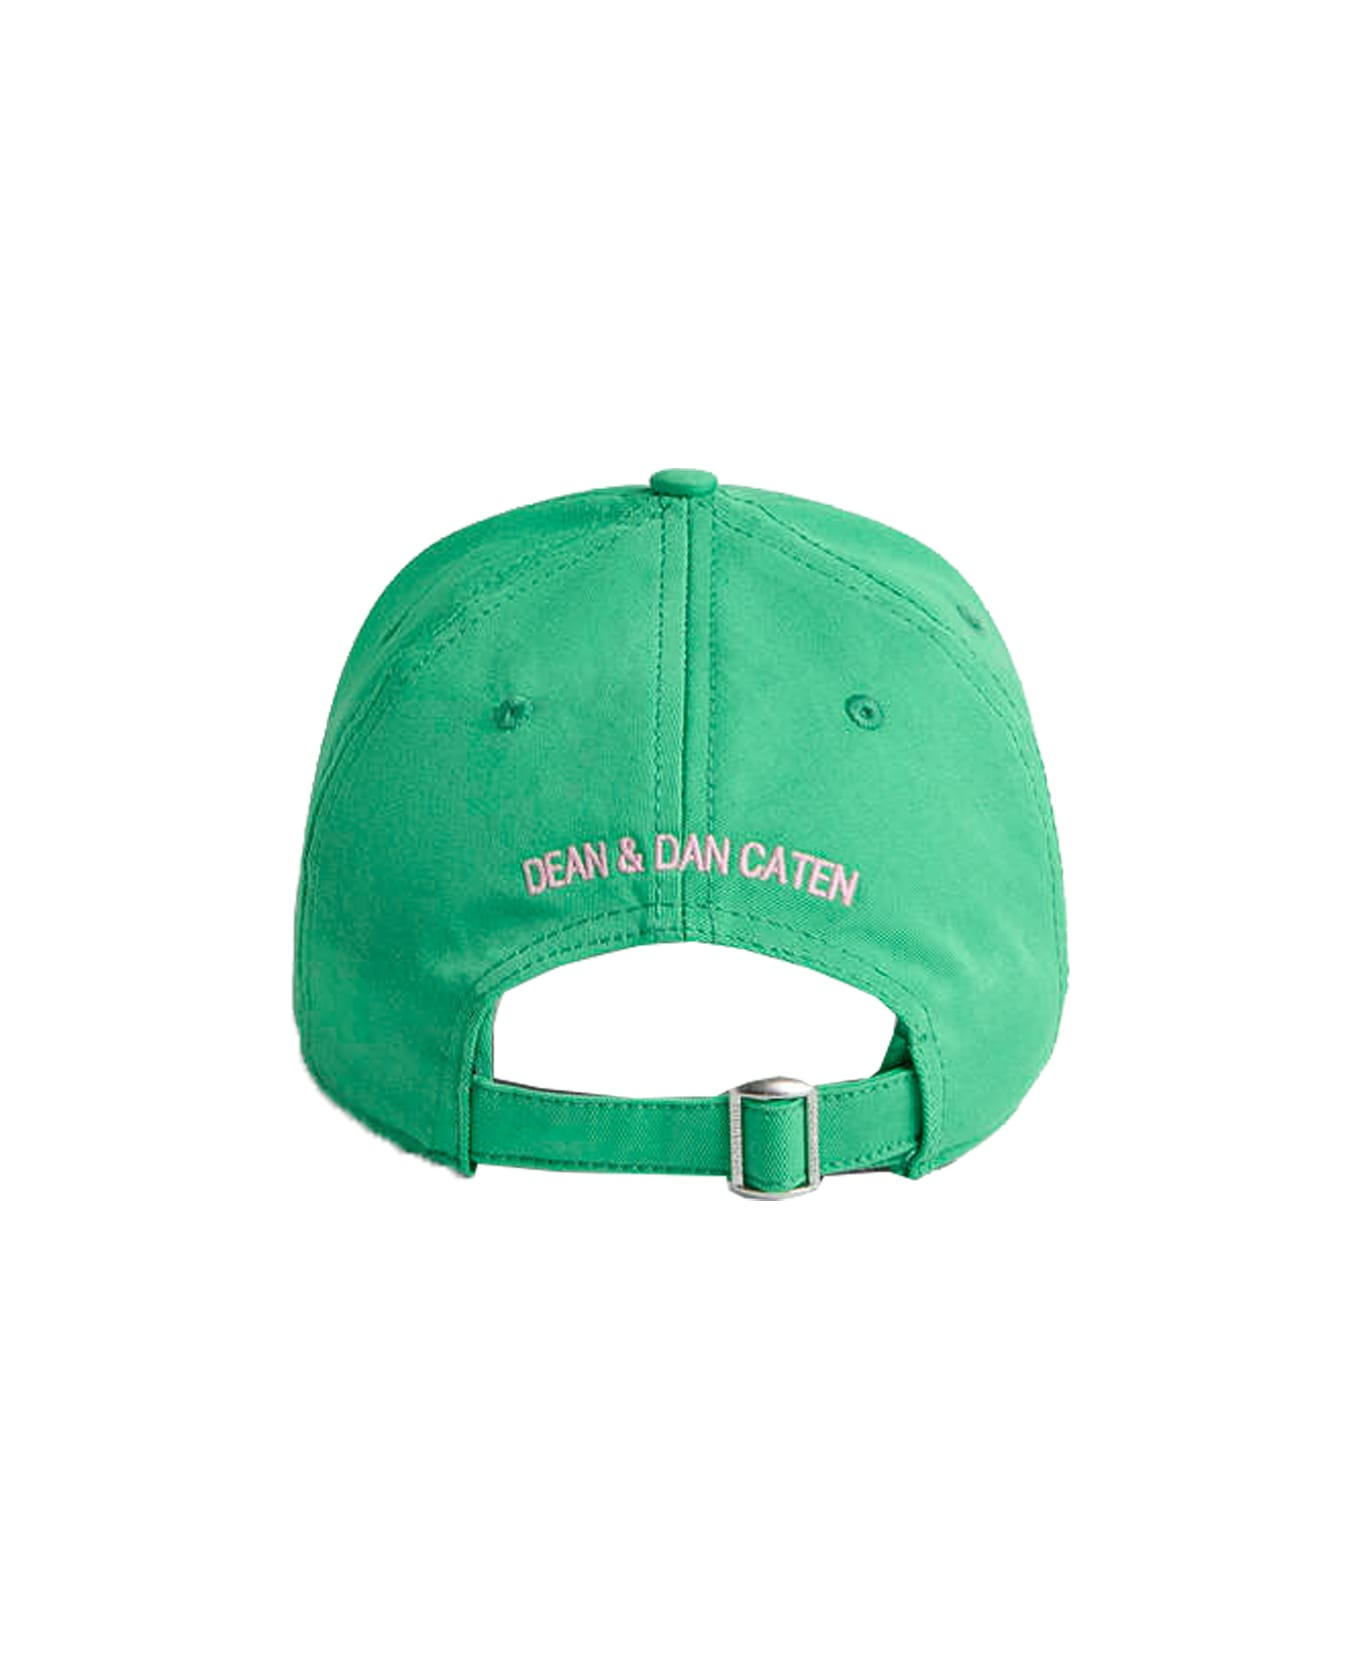 Dsquared2 Logo Embroidered Baseball Cap - Verde 帽子